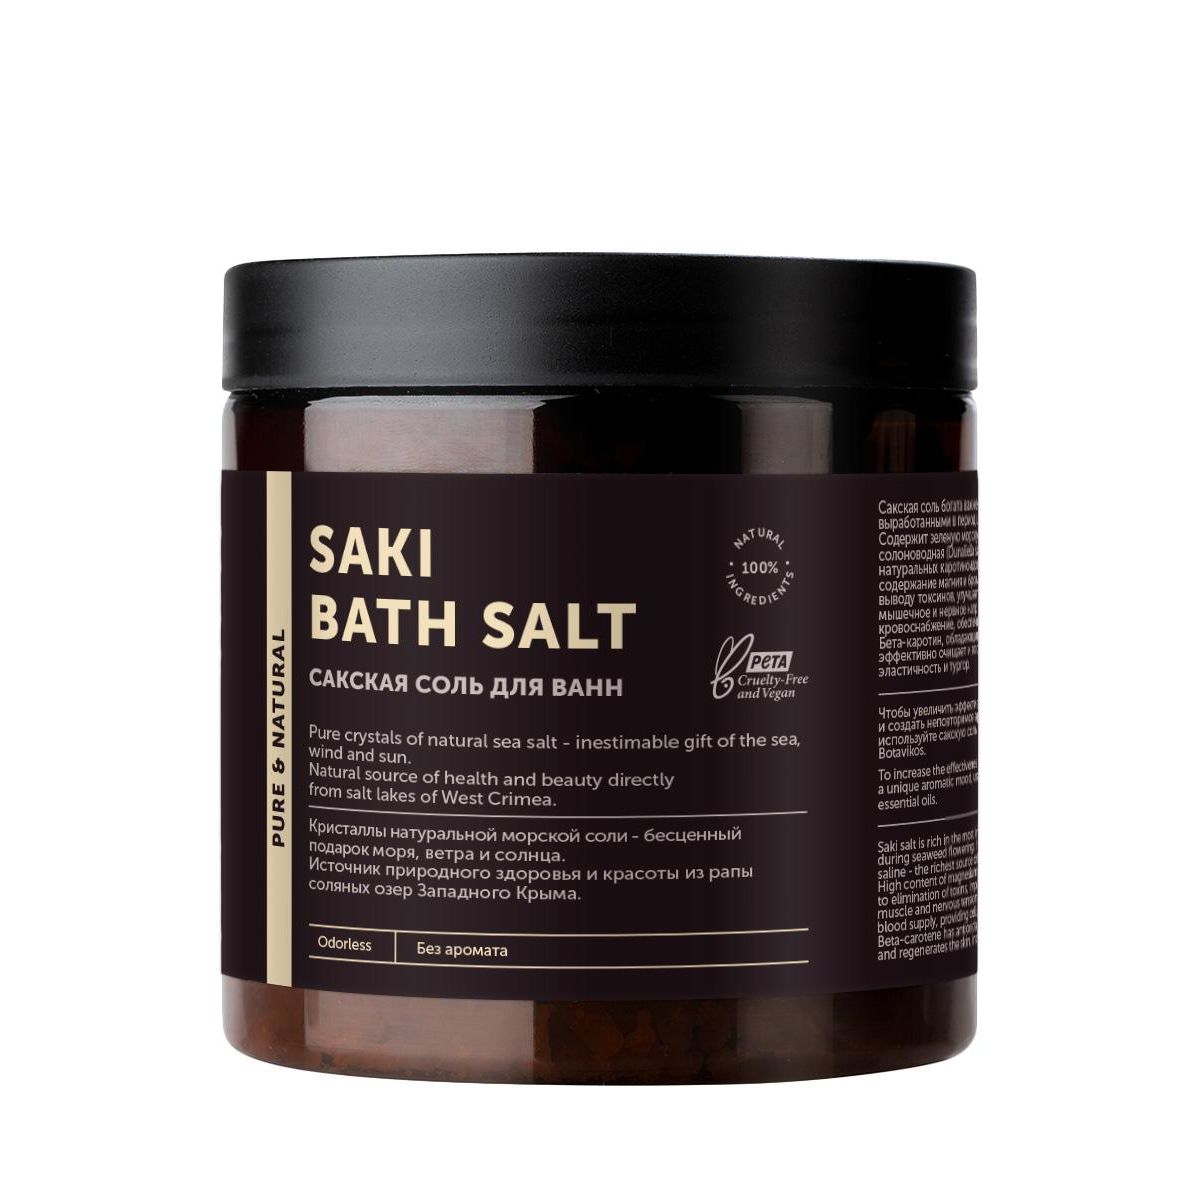 Соль для ванн Botavikos Сакская без аромата, 650 г